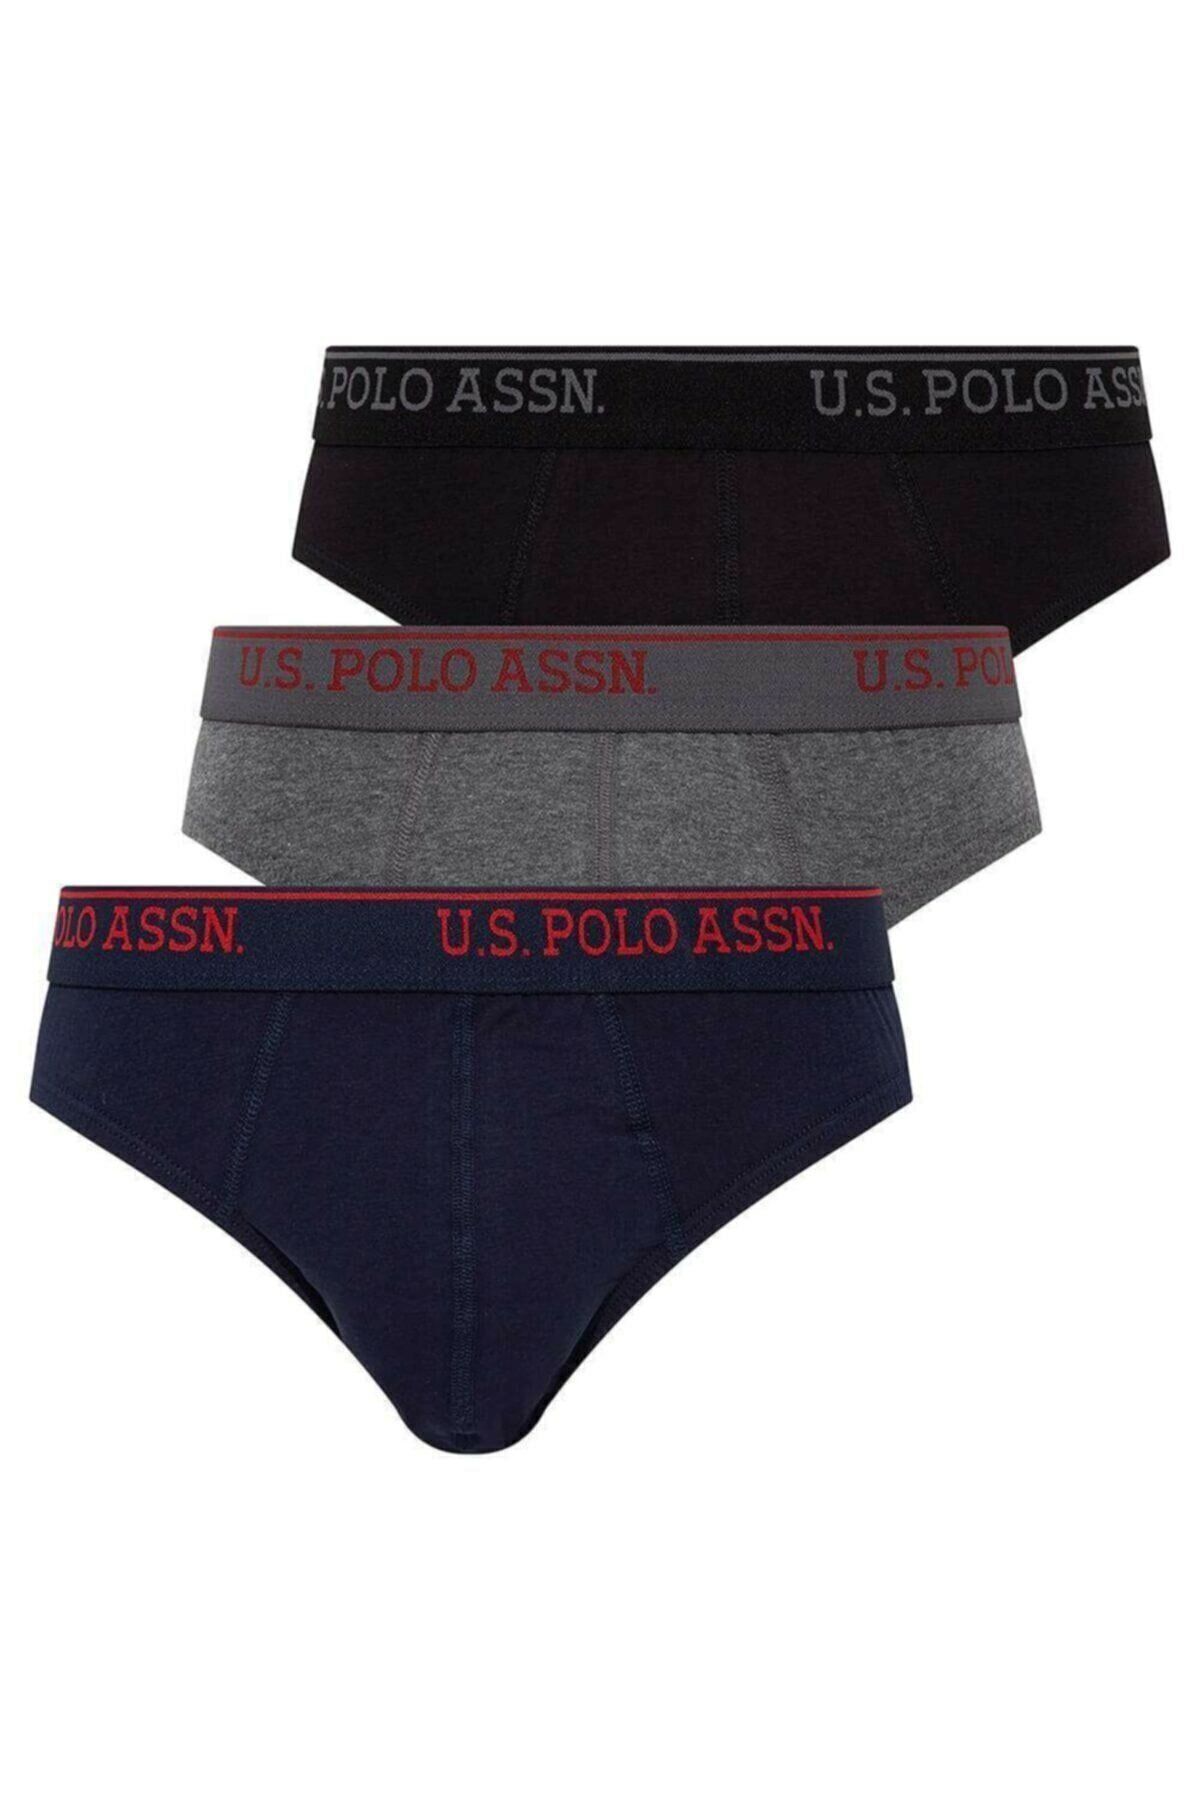 U.S. Polo Assn. U.S. Polo Assn. 80436 Siyah Gri Lacivert 3Lü Erkek Slip